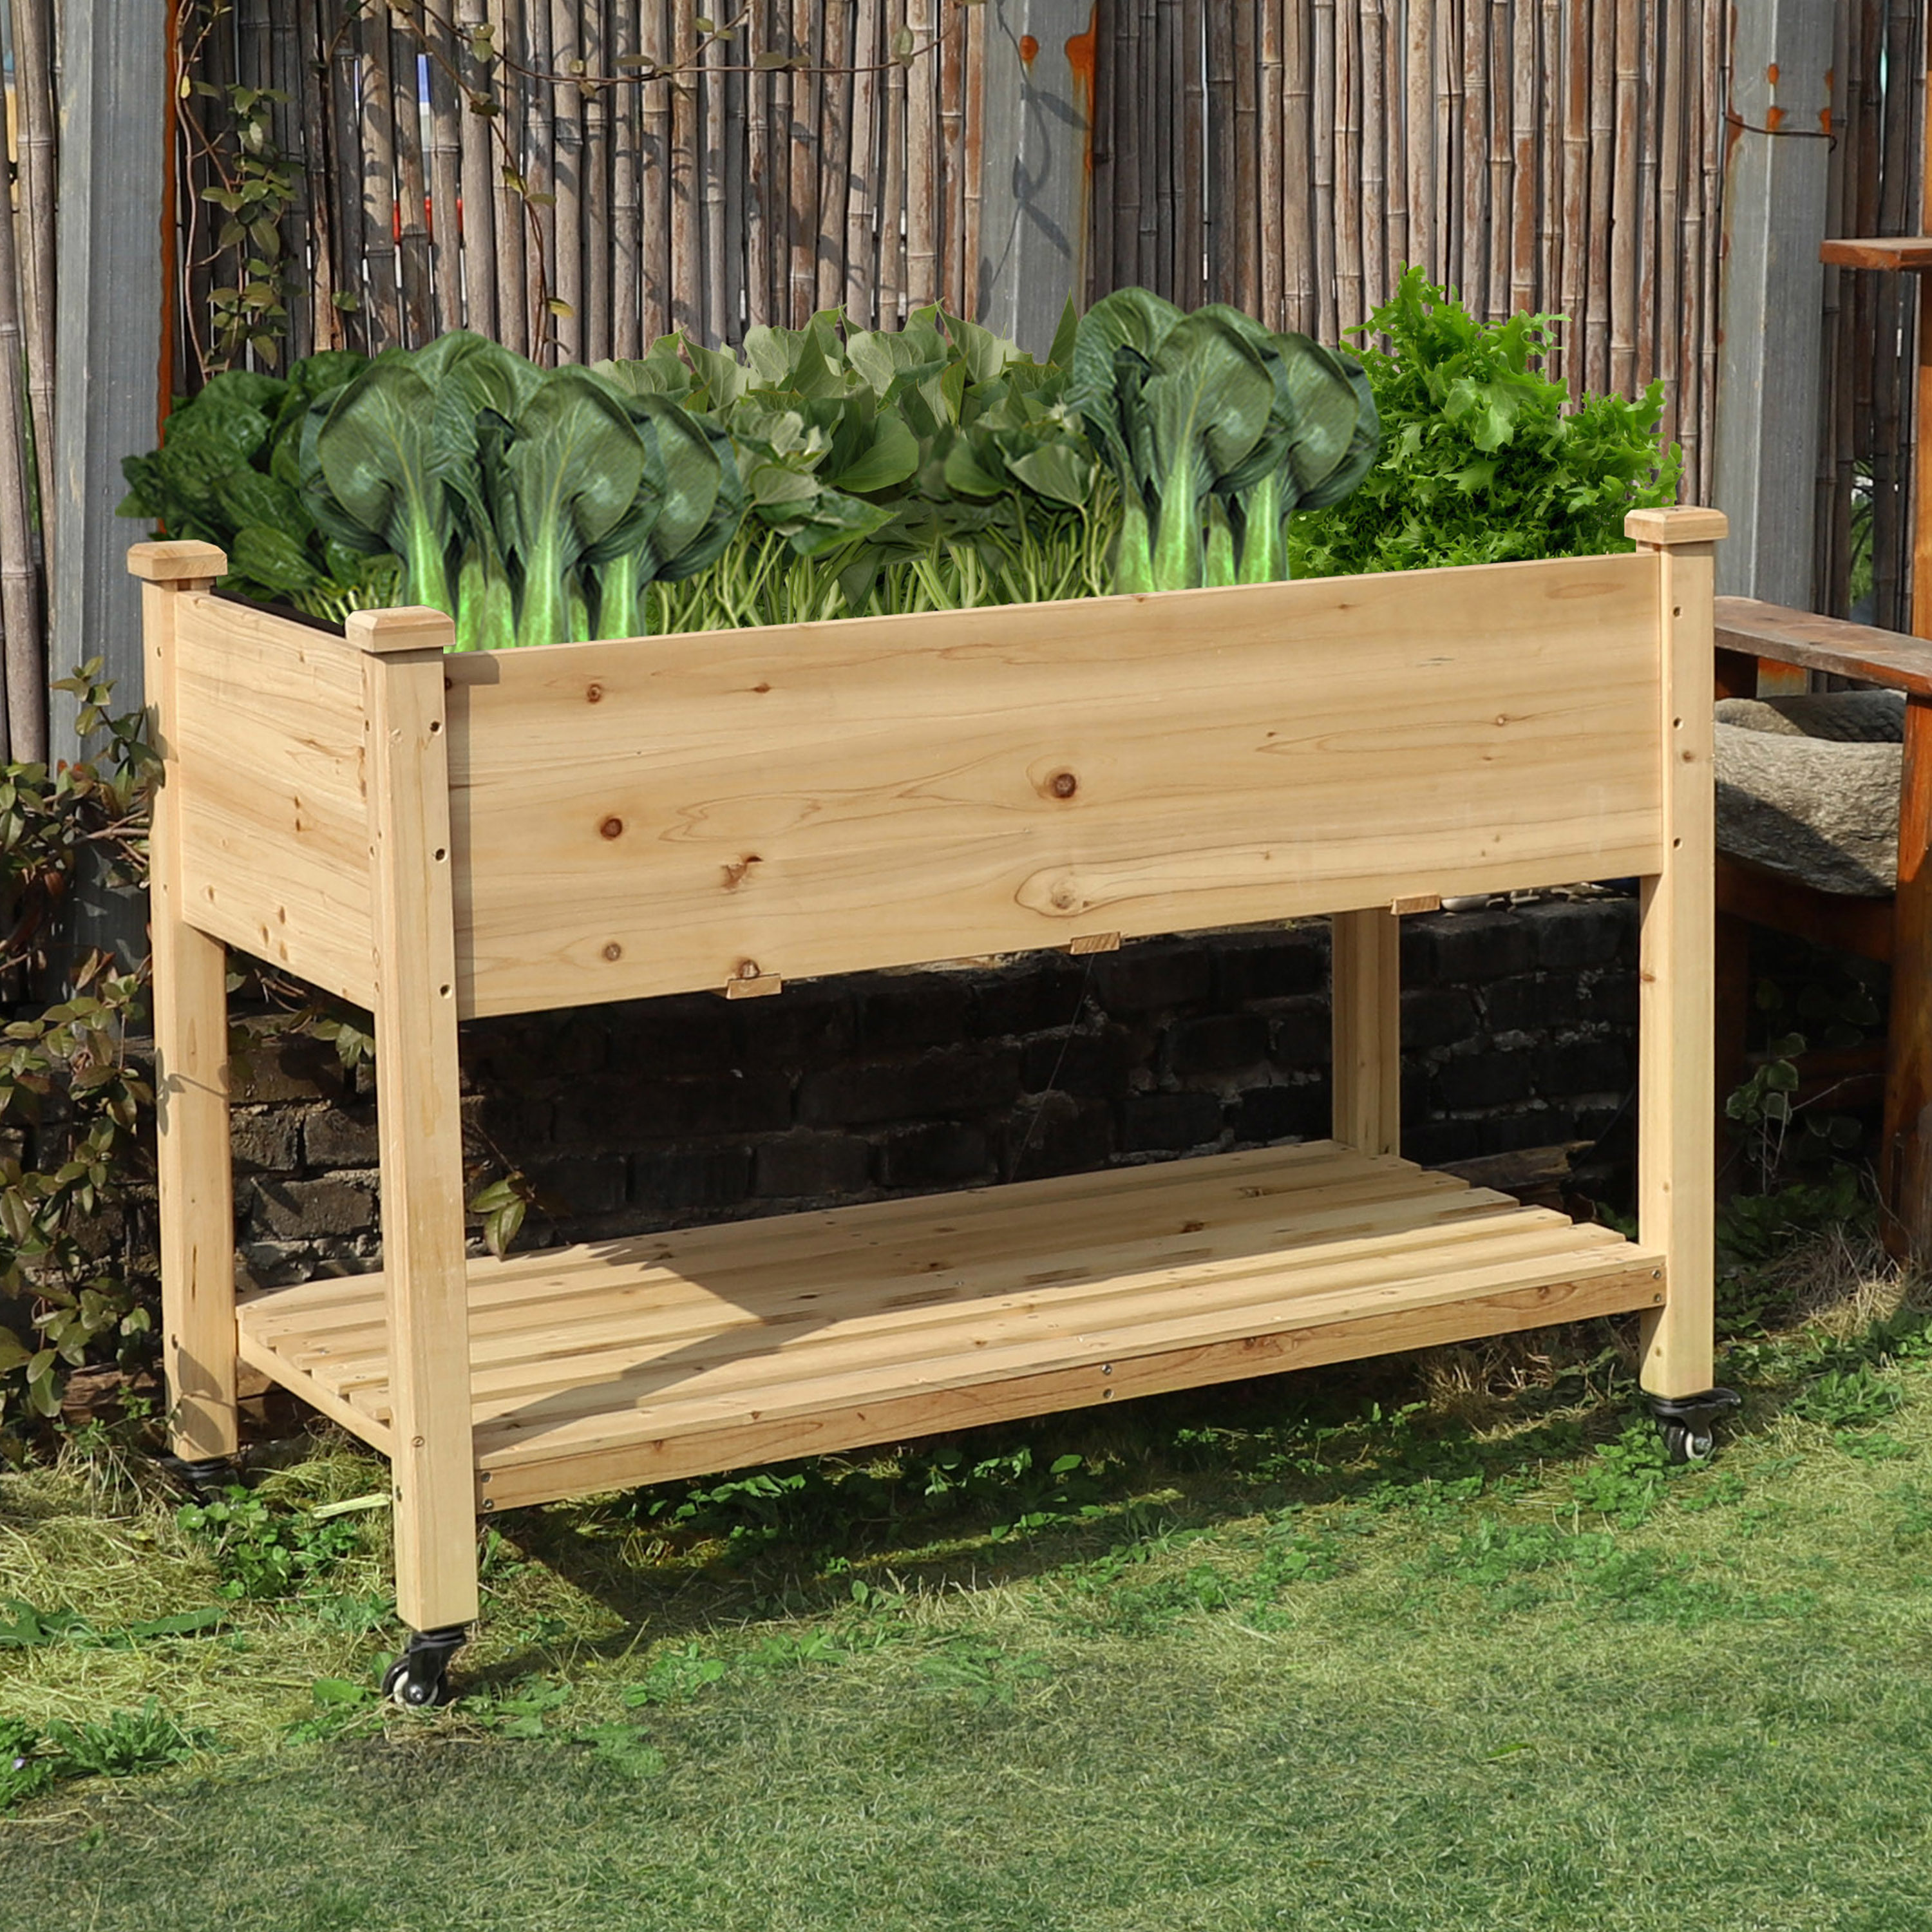 ECOgardener Raised Bed Planter 4x4 Outdoor Wooden Raised Garden Bed Kit for Vegetables Fruit Herbs Flowers and Plants Tiered Design